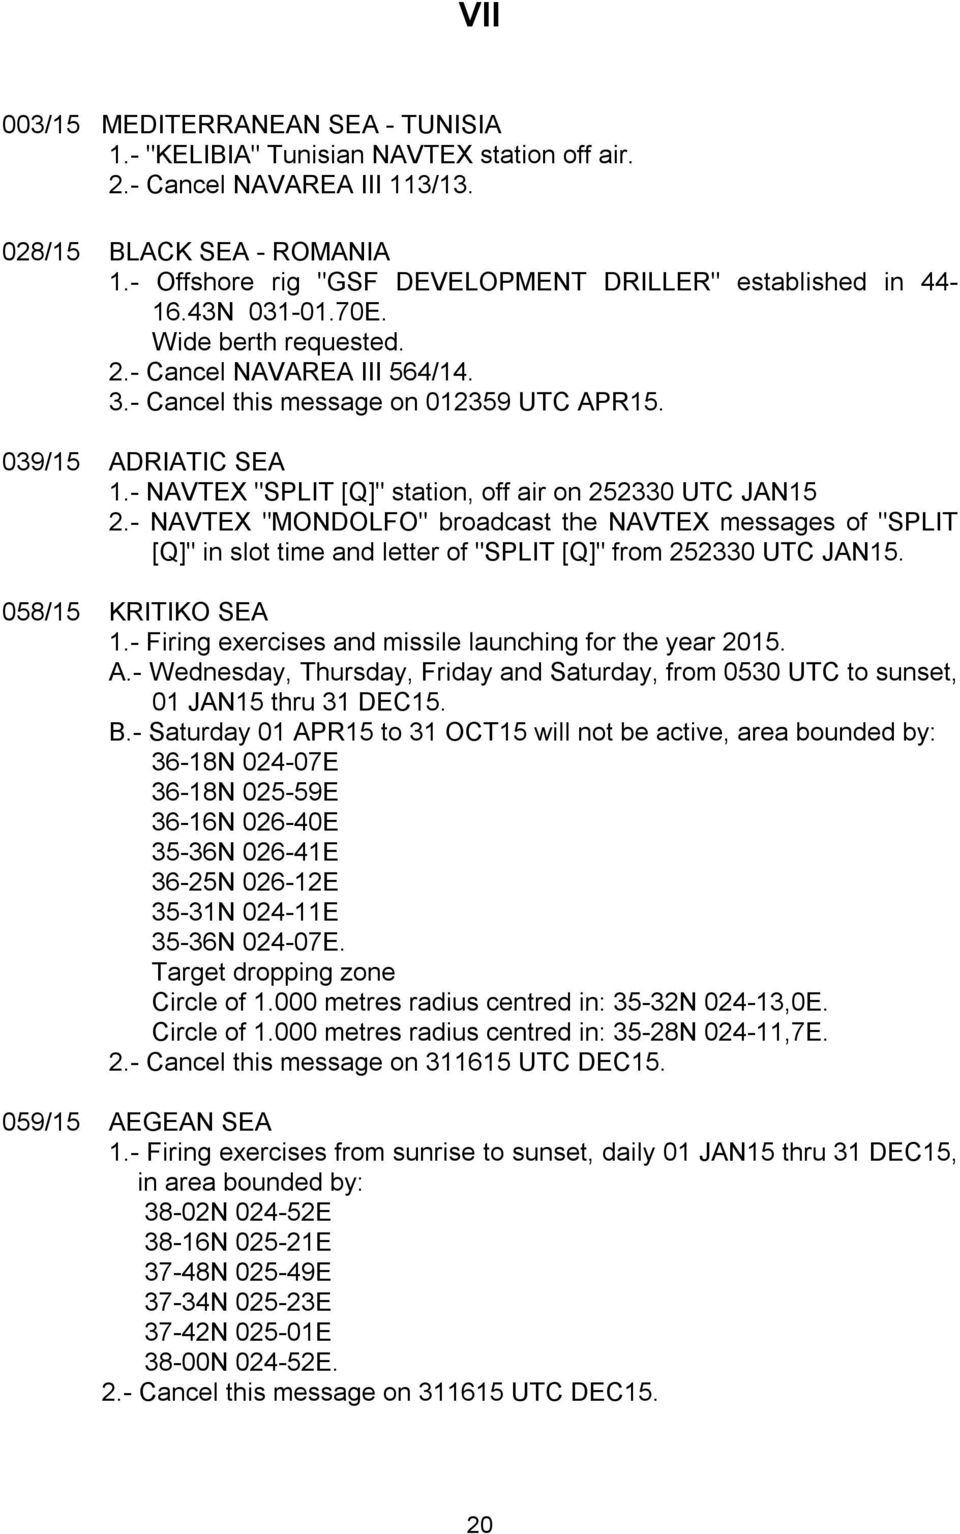 - NAVTEX "SPLIT [Q]" station, off air on 252330 UTC JAN15 2.- NAVTEX "MONDOLFO" broadcast the NAVTEX messages of "SPLIT [Q]" in slot time and letter of "SPLIT [Q]" from 252330 UTC JAN15.